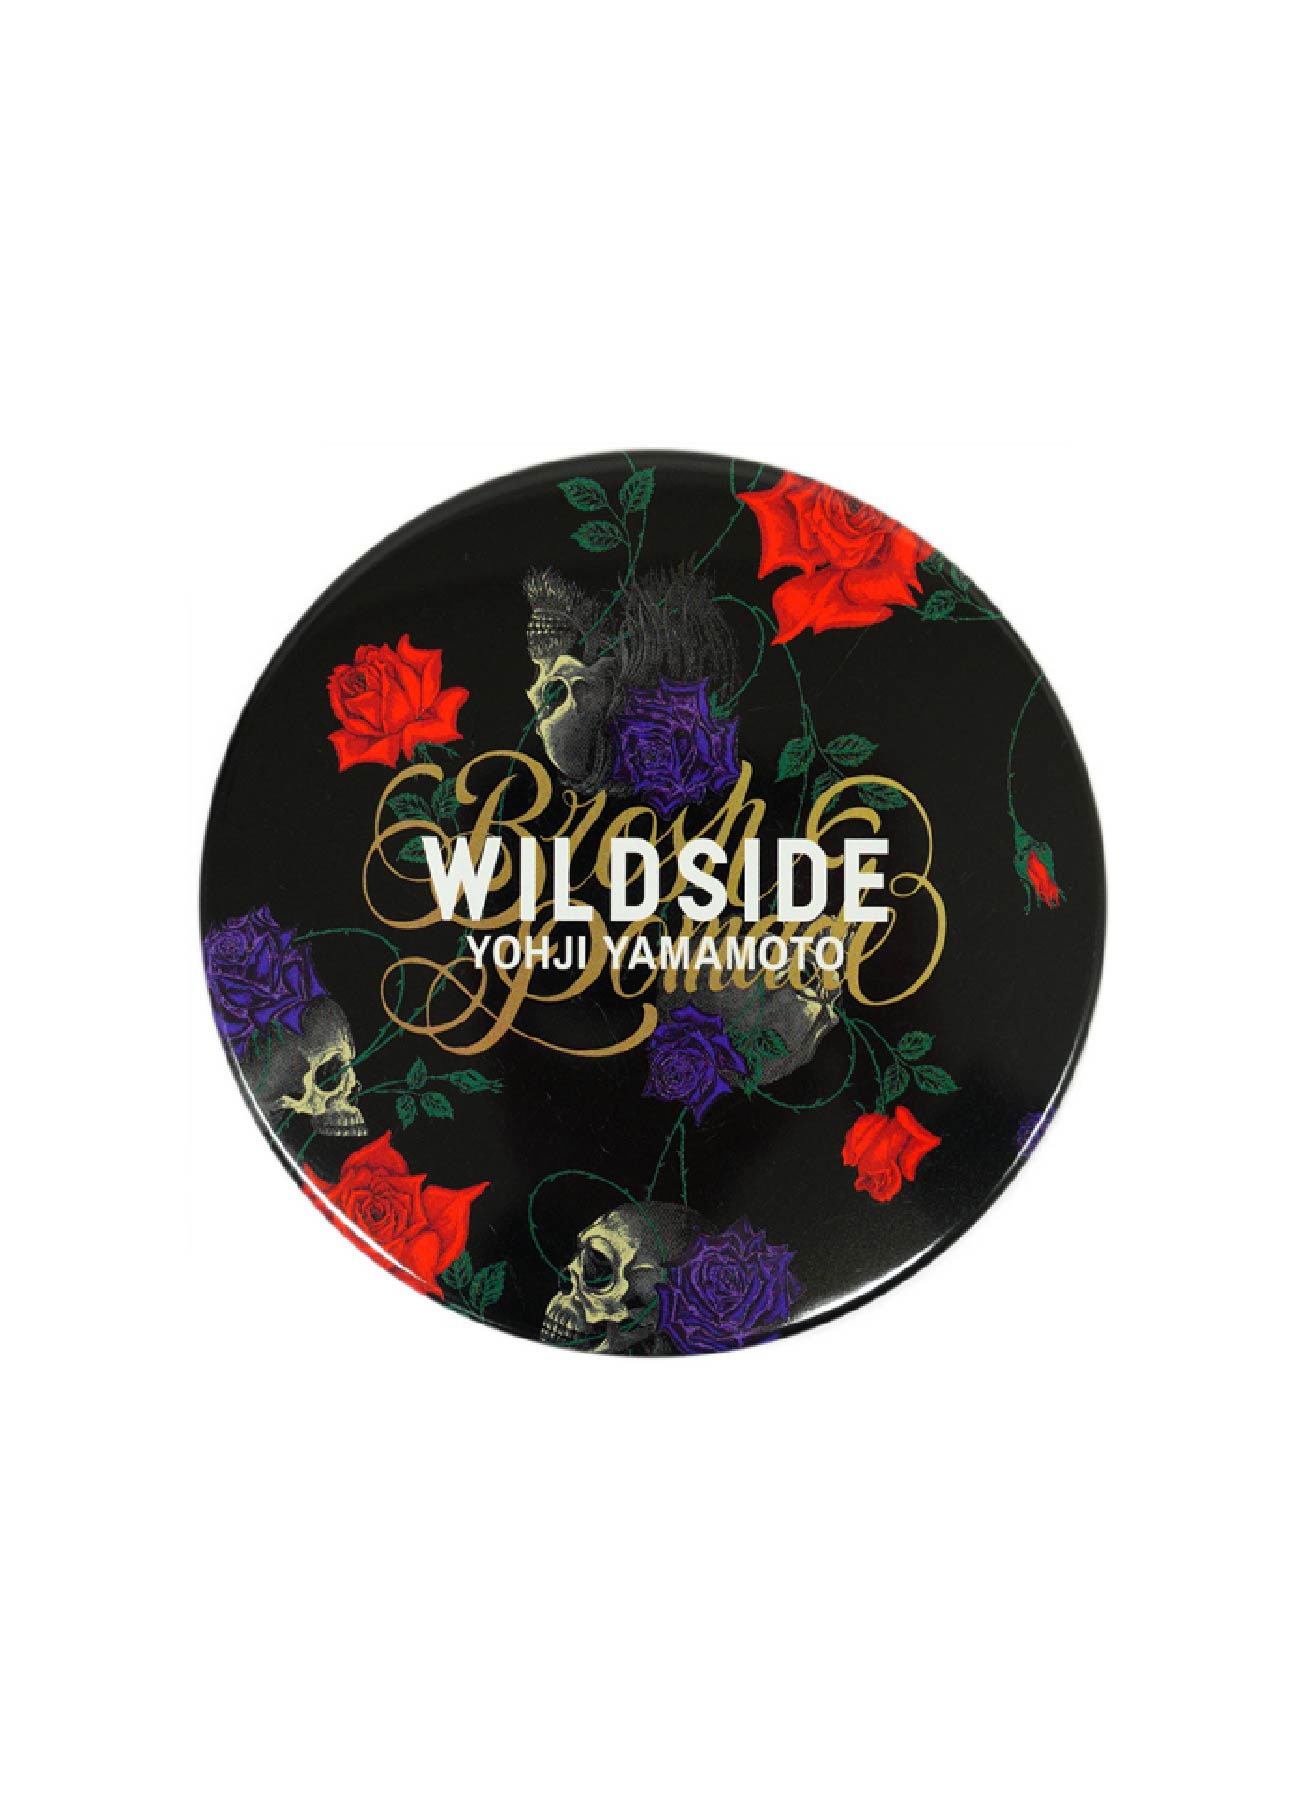 【5/25 12:00(JST) release】WILDSIDE × BROSH POMADE (SKULL ROSE)